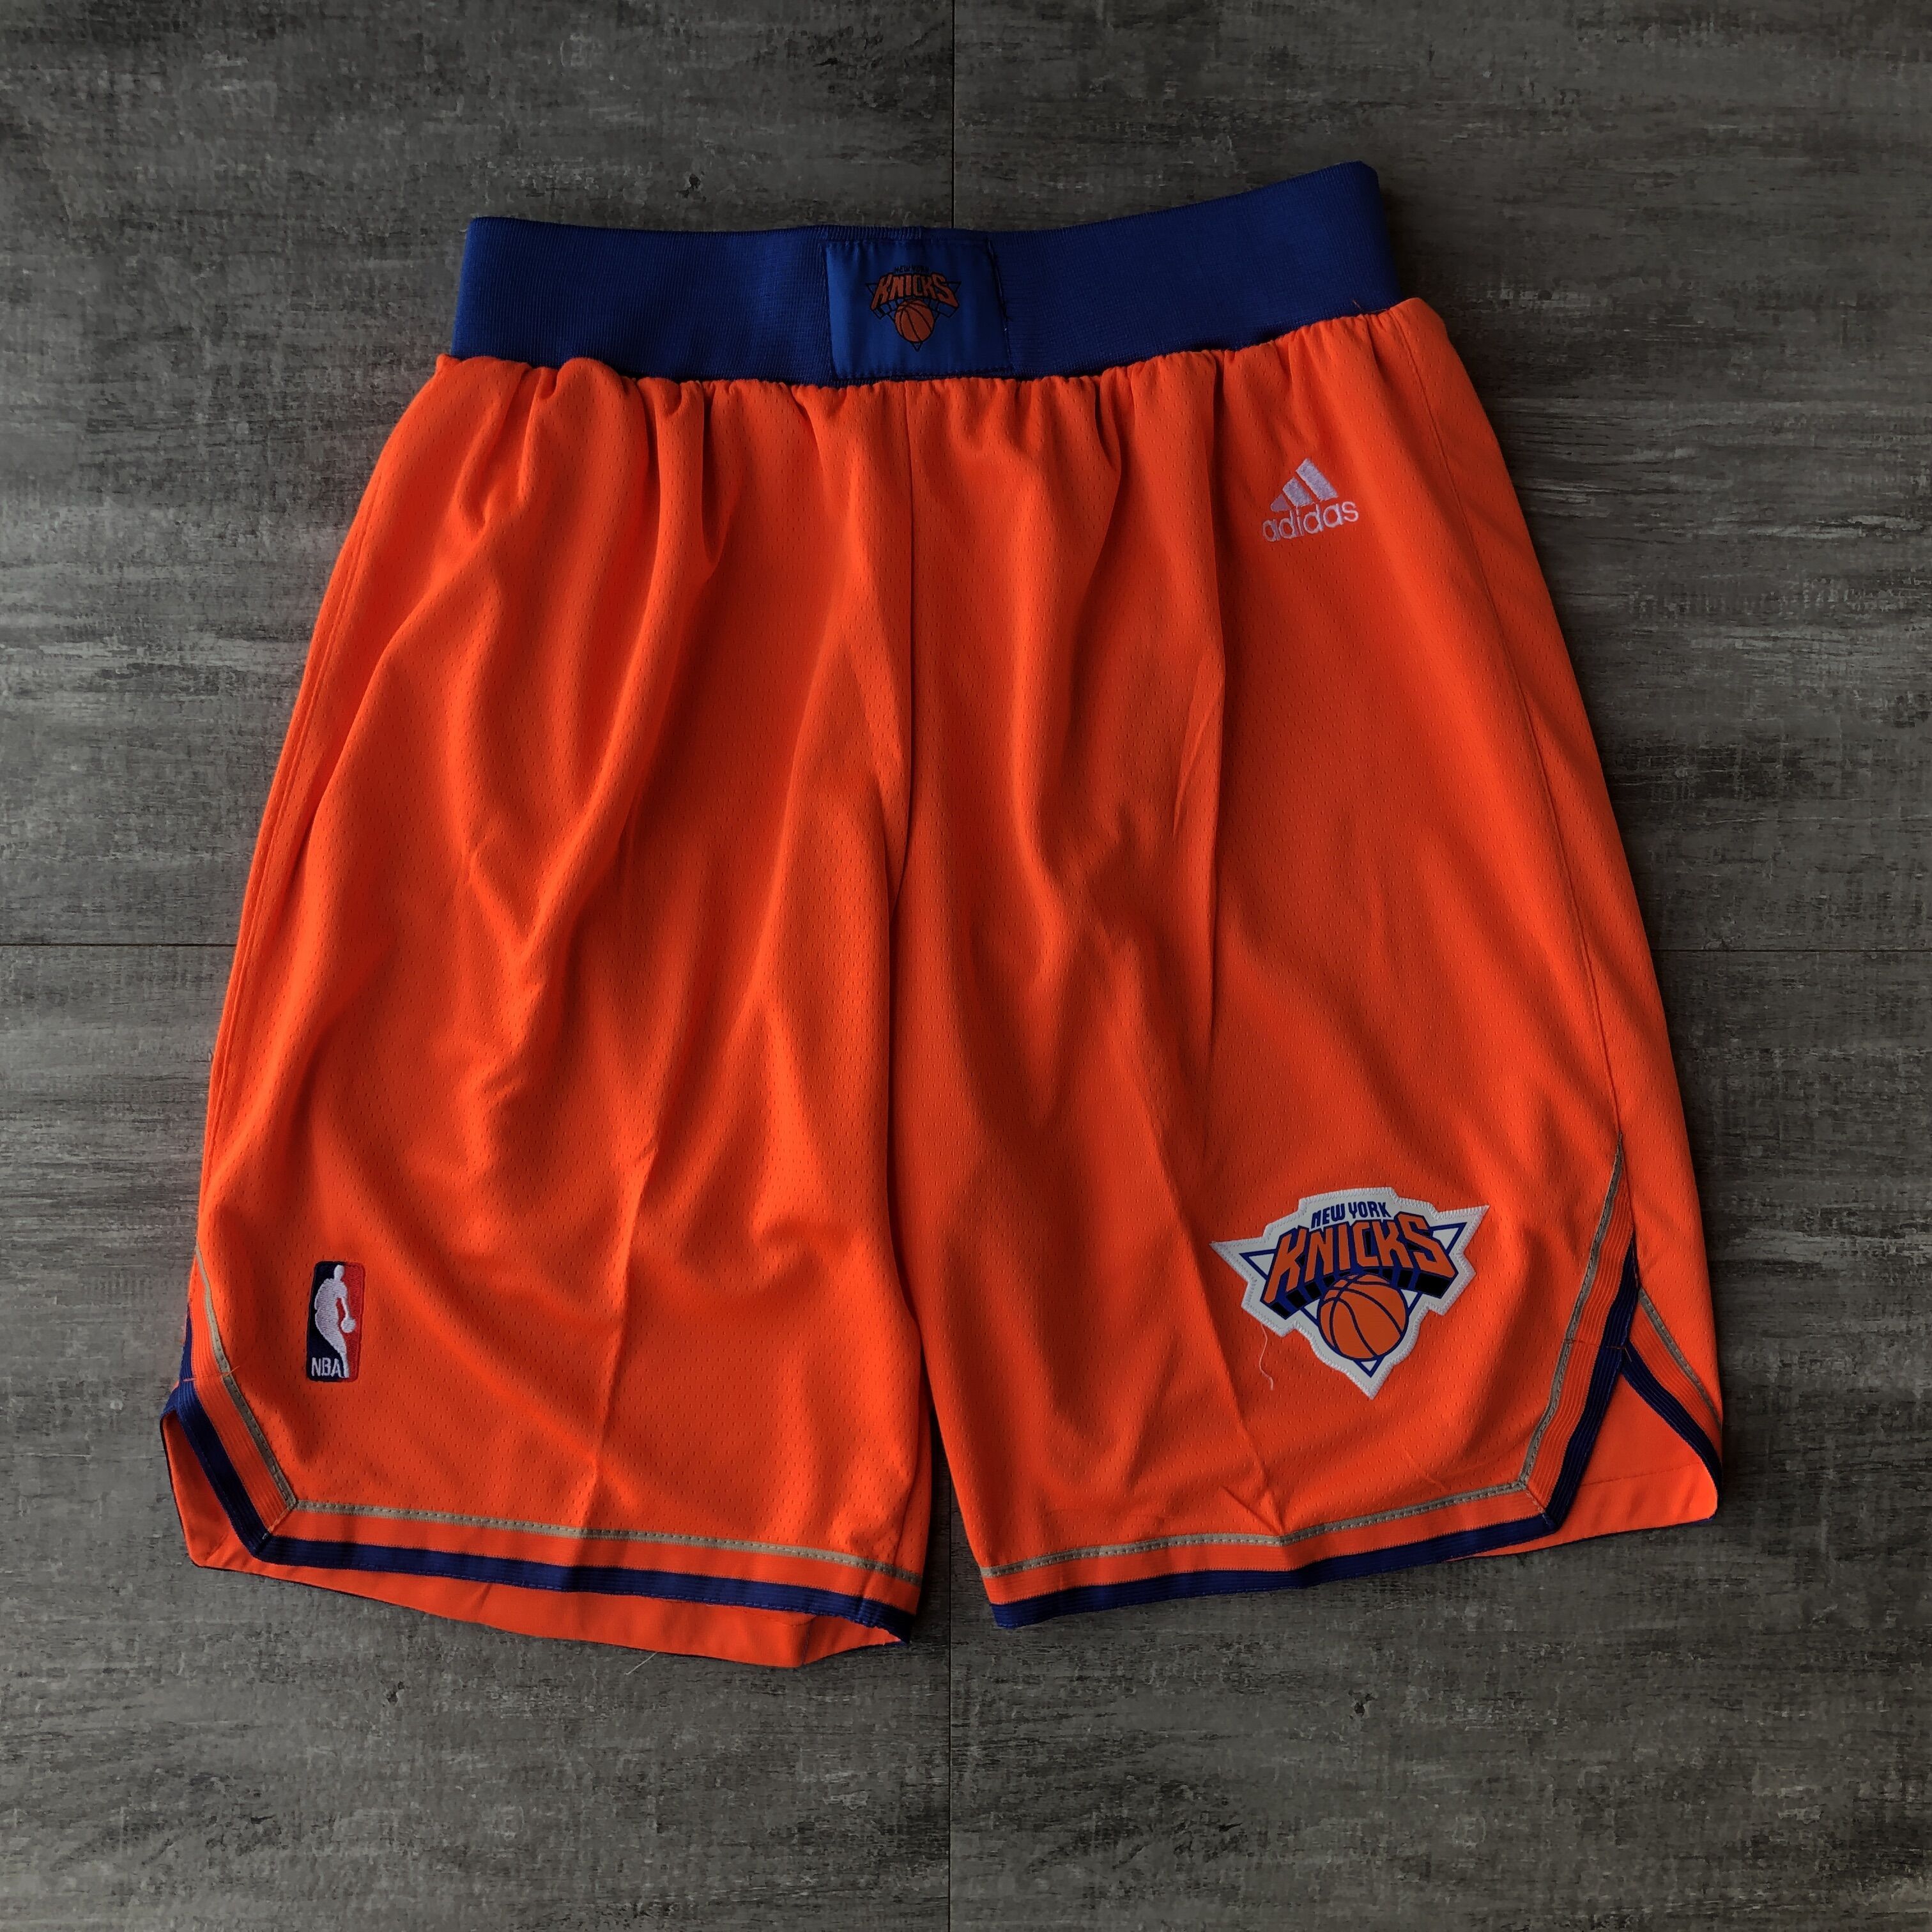 Cheap Men NBA New York Knicks Orange Shorts 04161